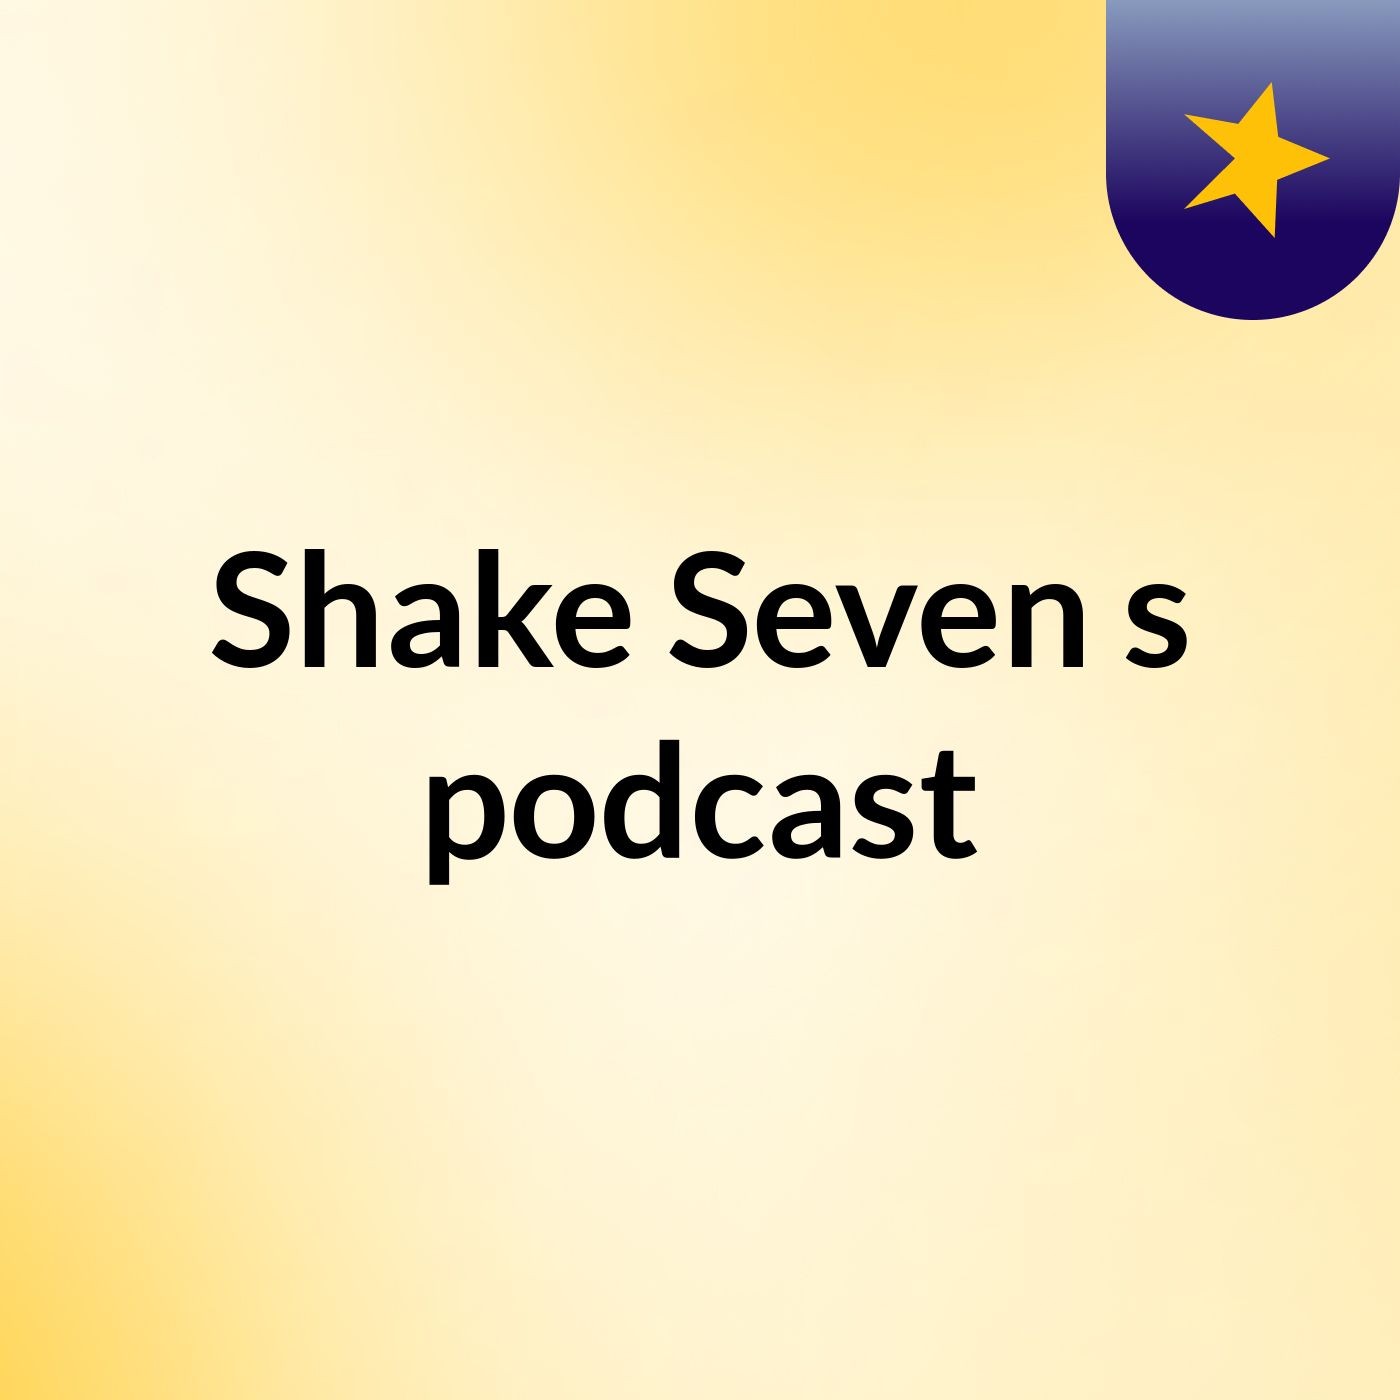 Shake Seven's podcast